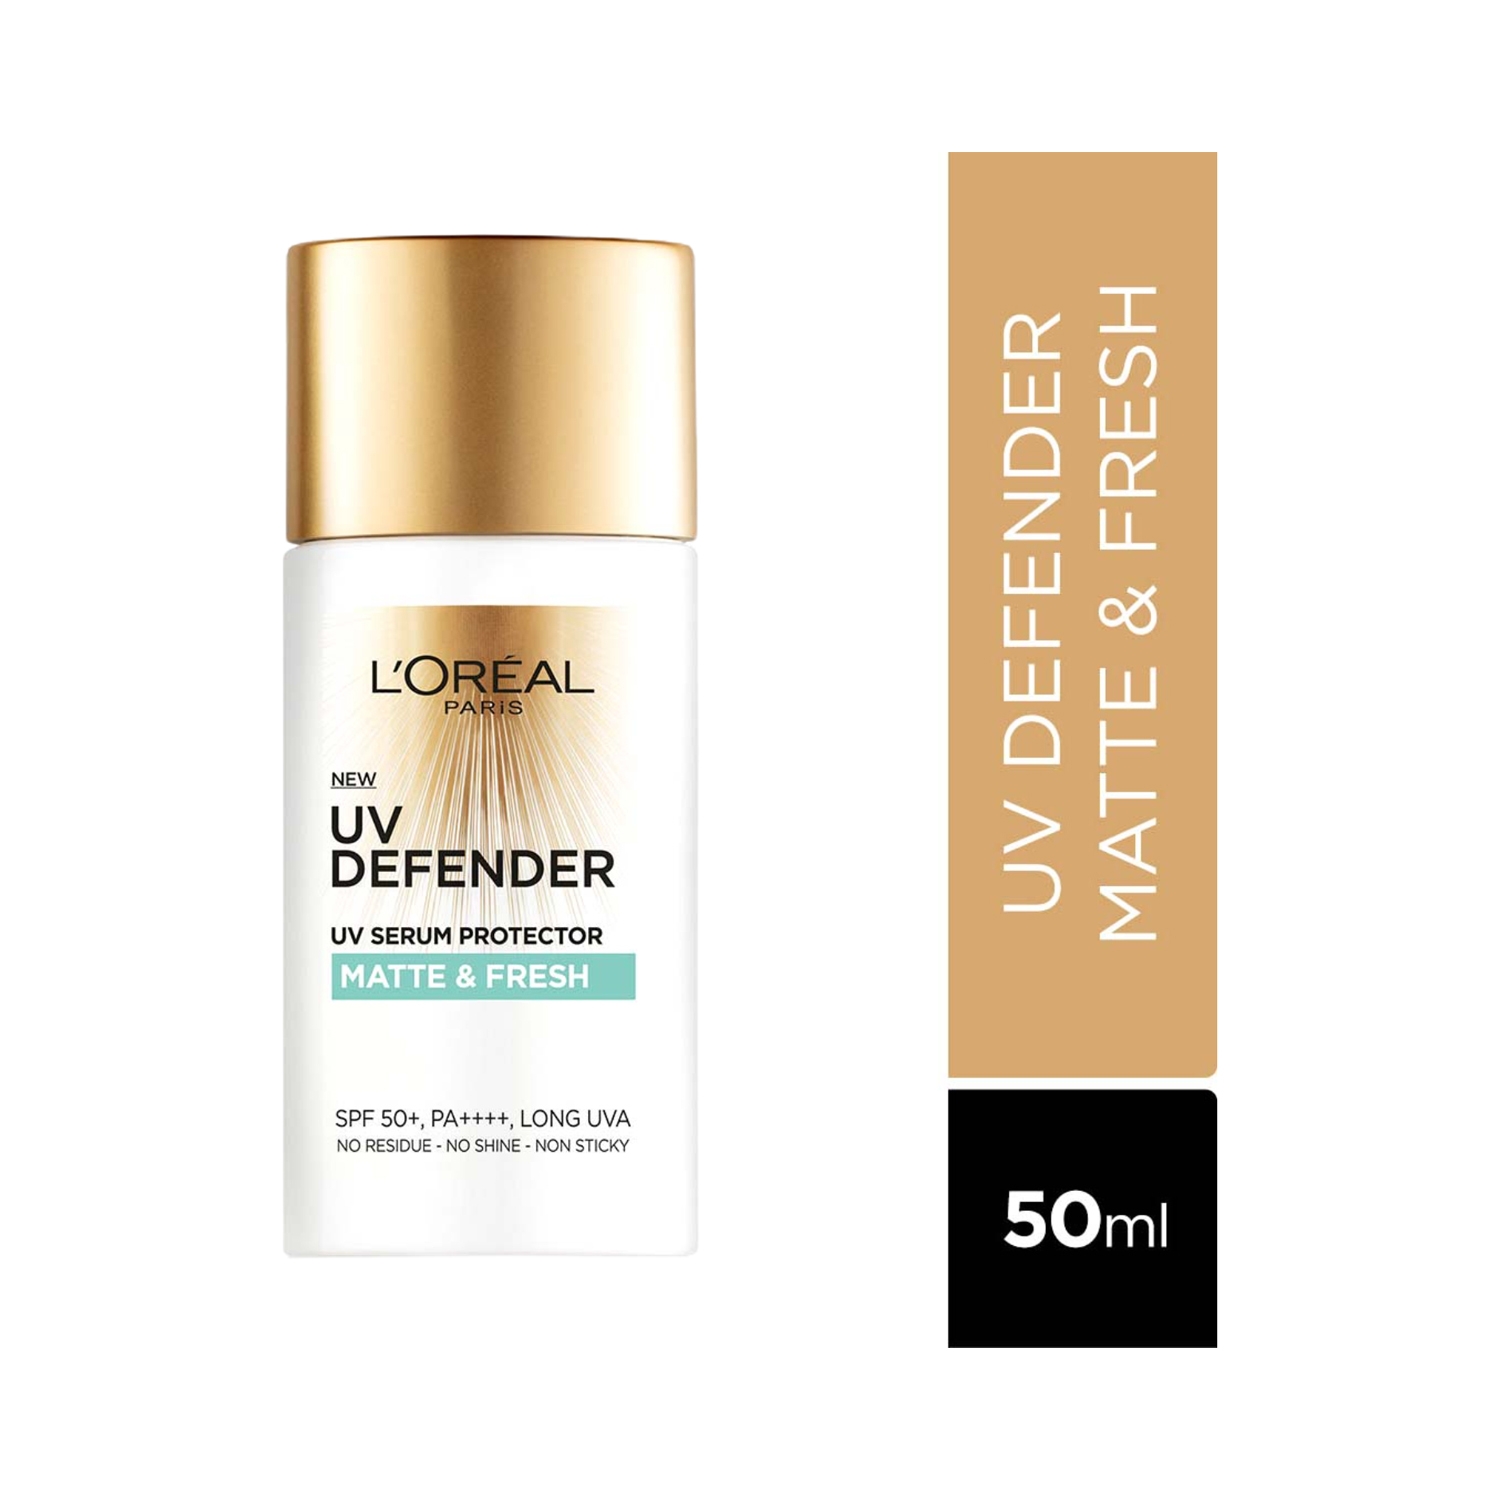 L'Oreal Paris | L'Oreal Paris UV Defender Serum Protector Sunscreen SPF 50 PA+++ - Matte & Fresh (50ml)